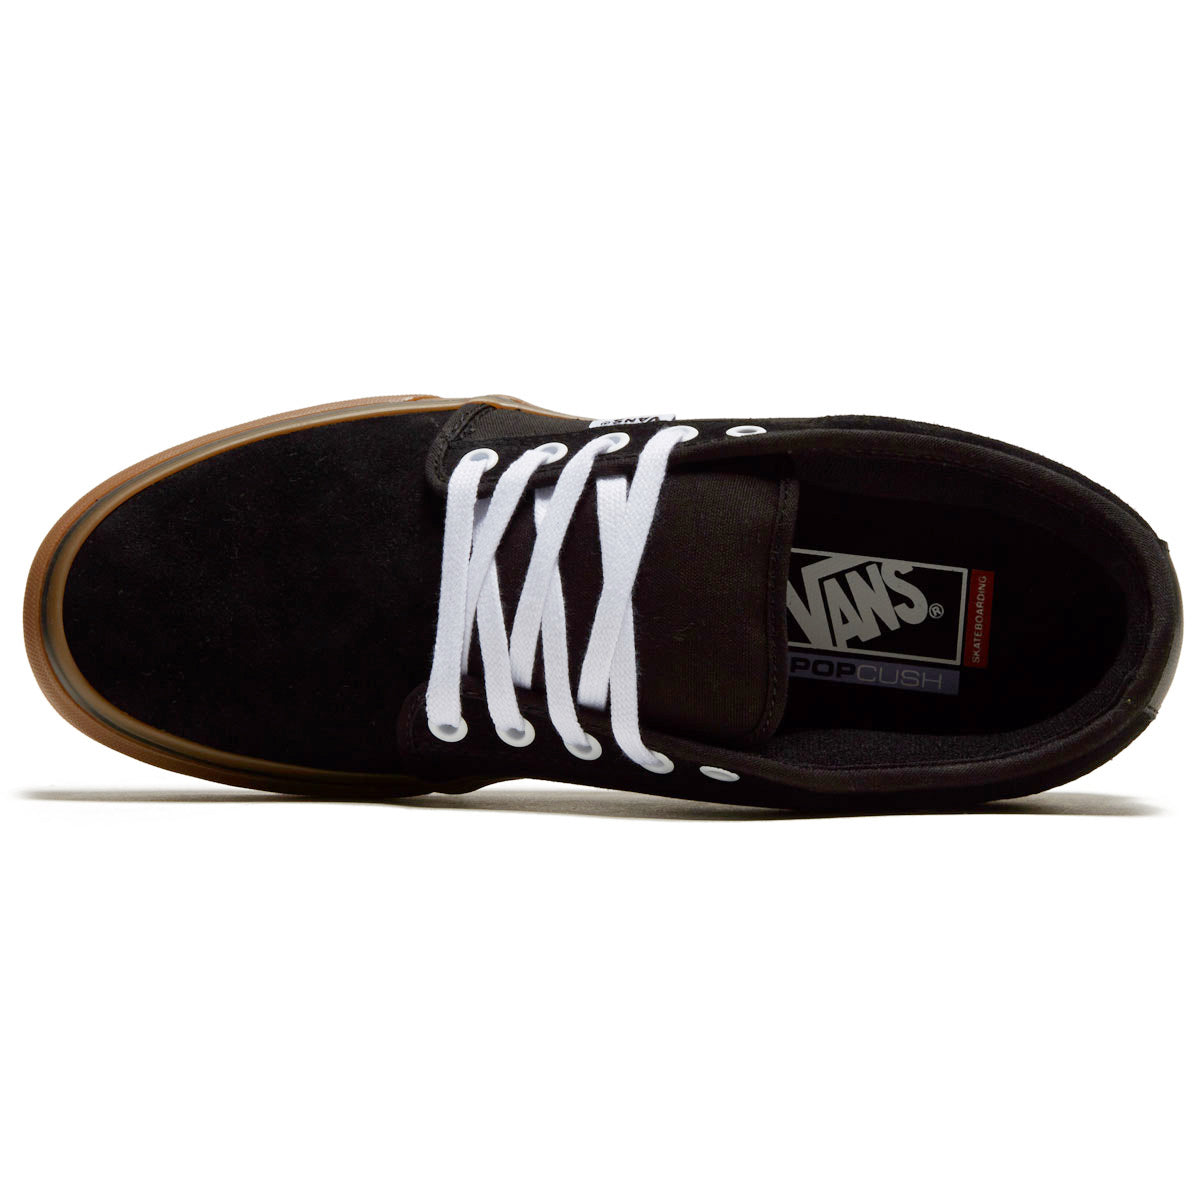 Vans Skate Chukka Low Shoes - Black/Black/Gum image 3